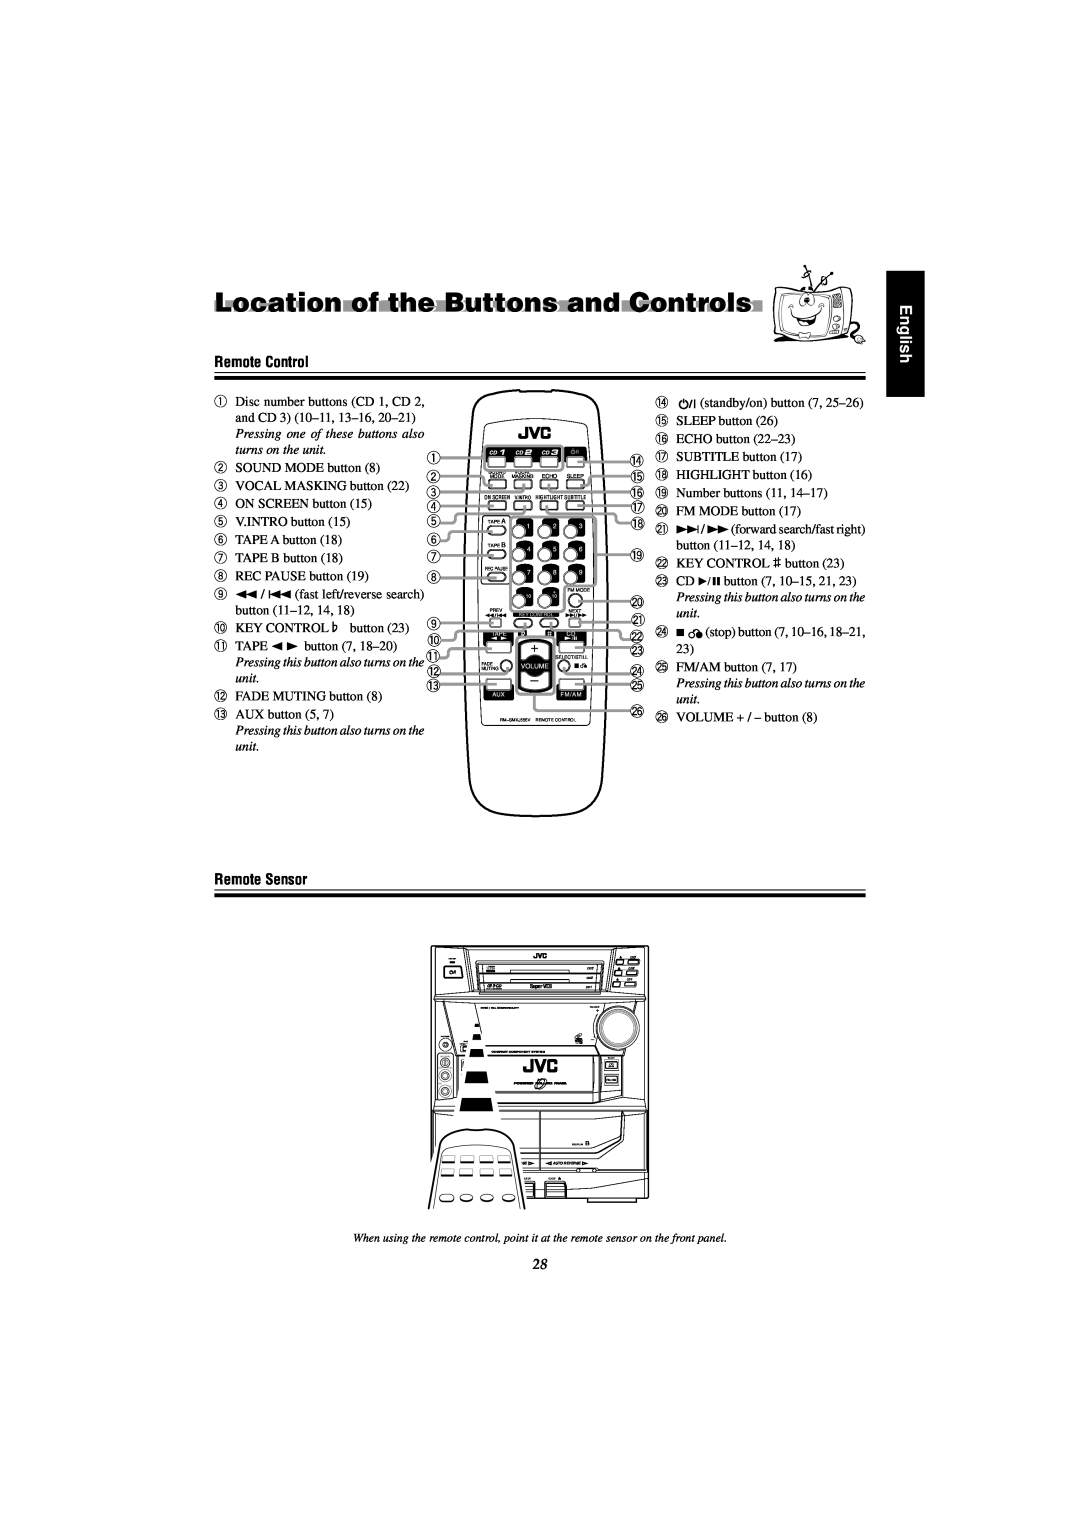 JVC MX-J555V, MX-J585V manual Location of the Buttons and Controls, English, Remote Control, Remote Sensor 